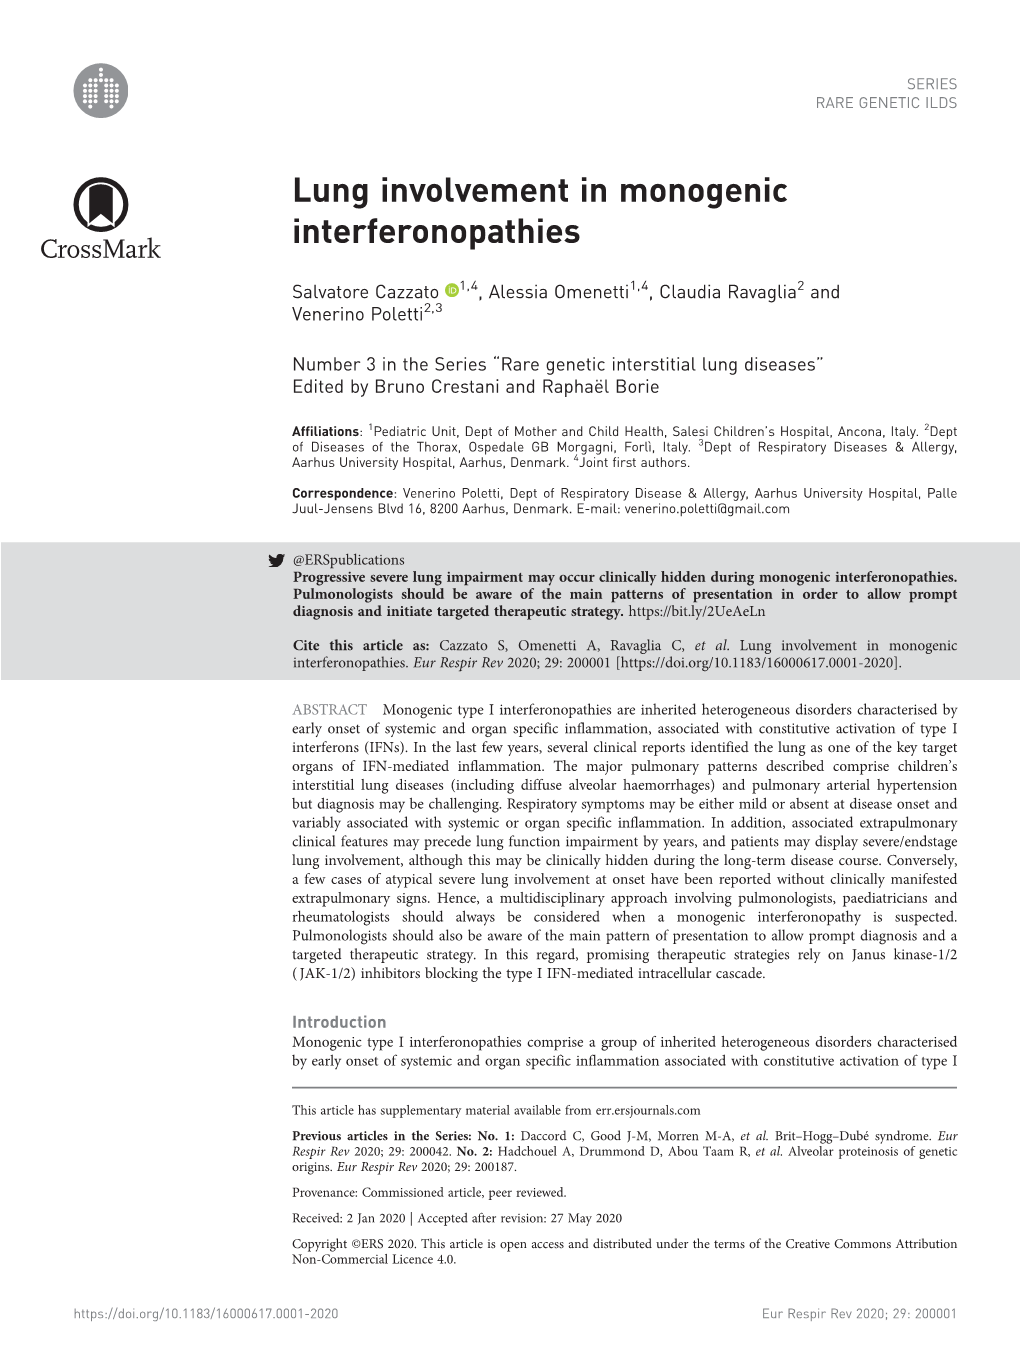 Lung Involvement in Monogenic Interferonopathies